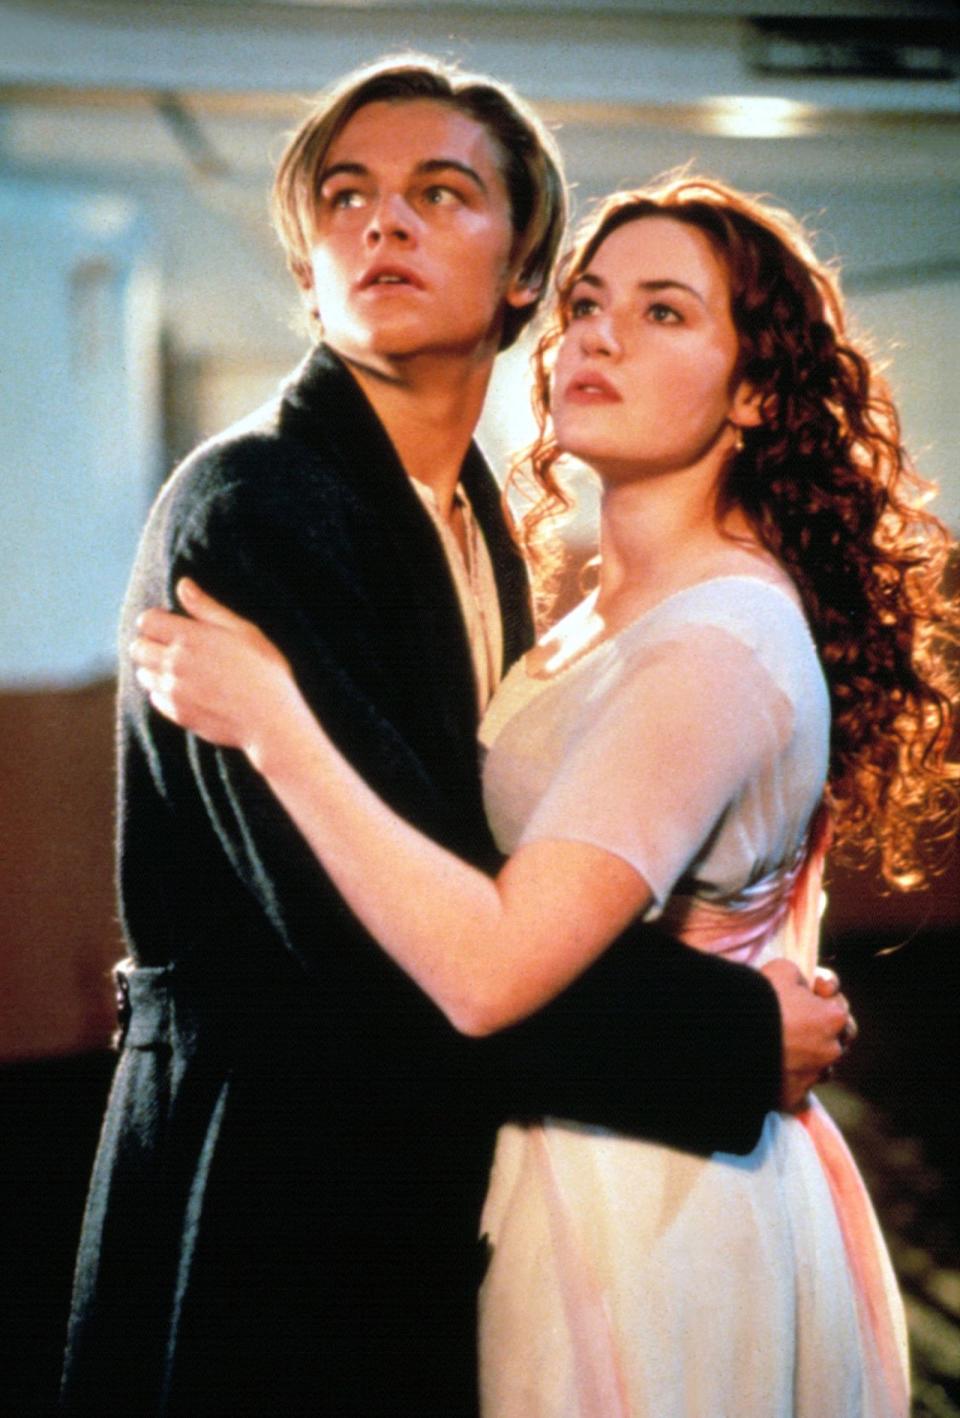 Jack and Rose, "Titanic"